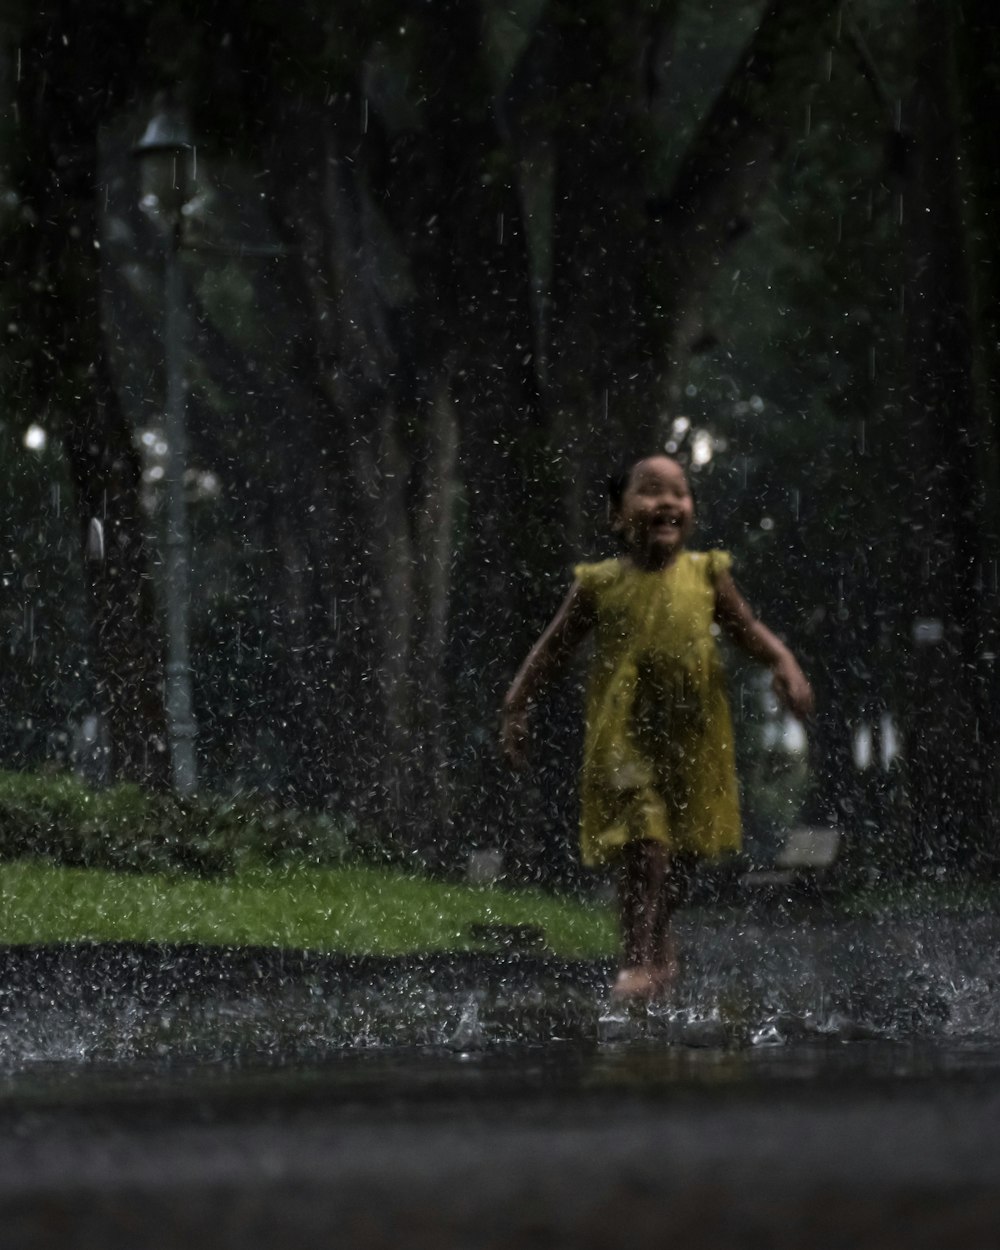 chica con vestido amarillo jugando bajo la lluvia